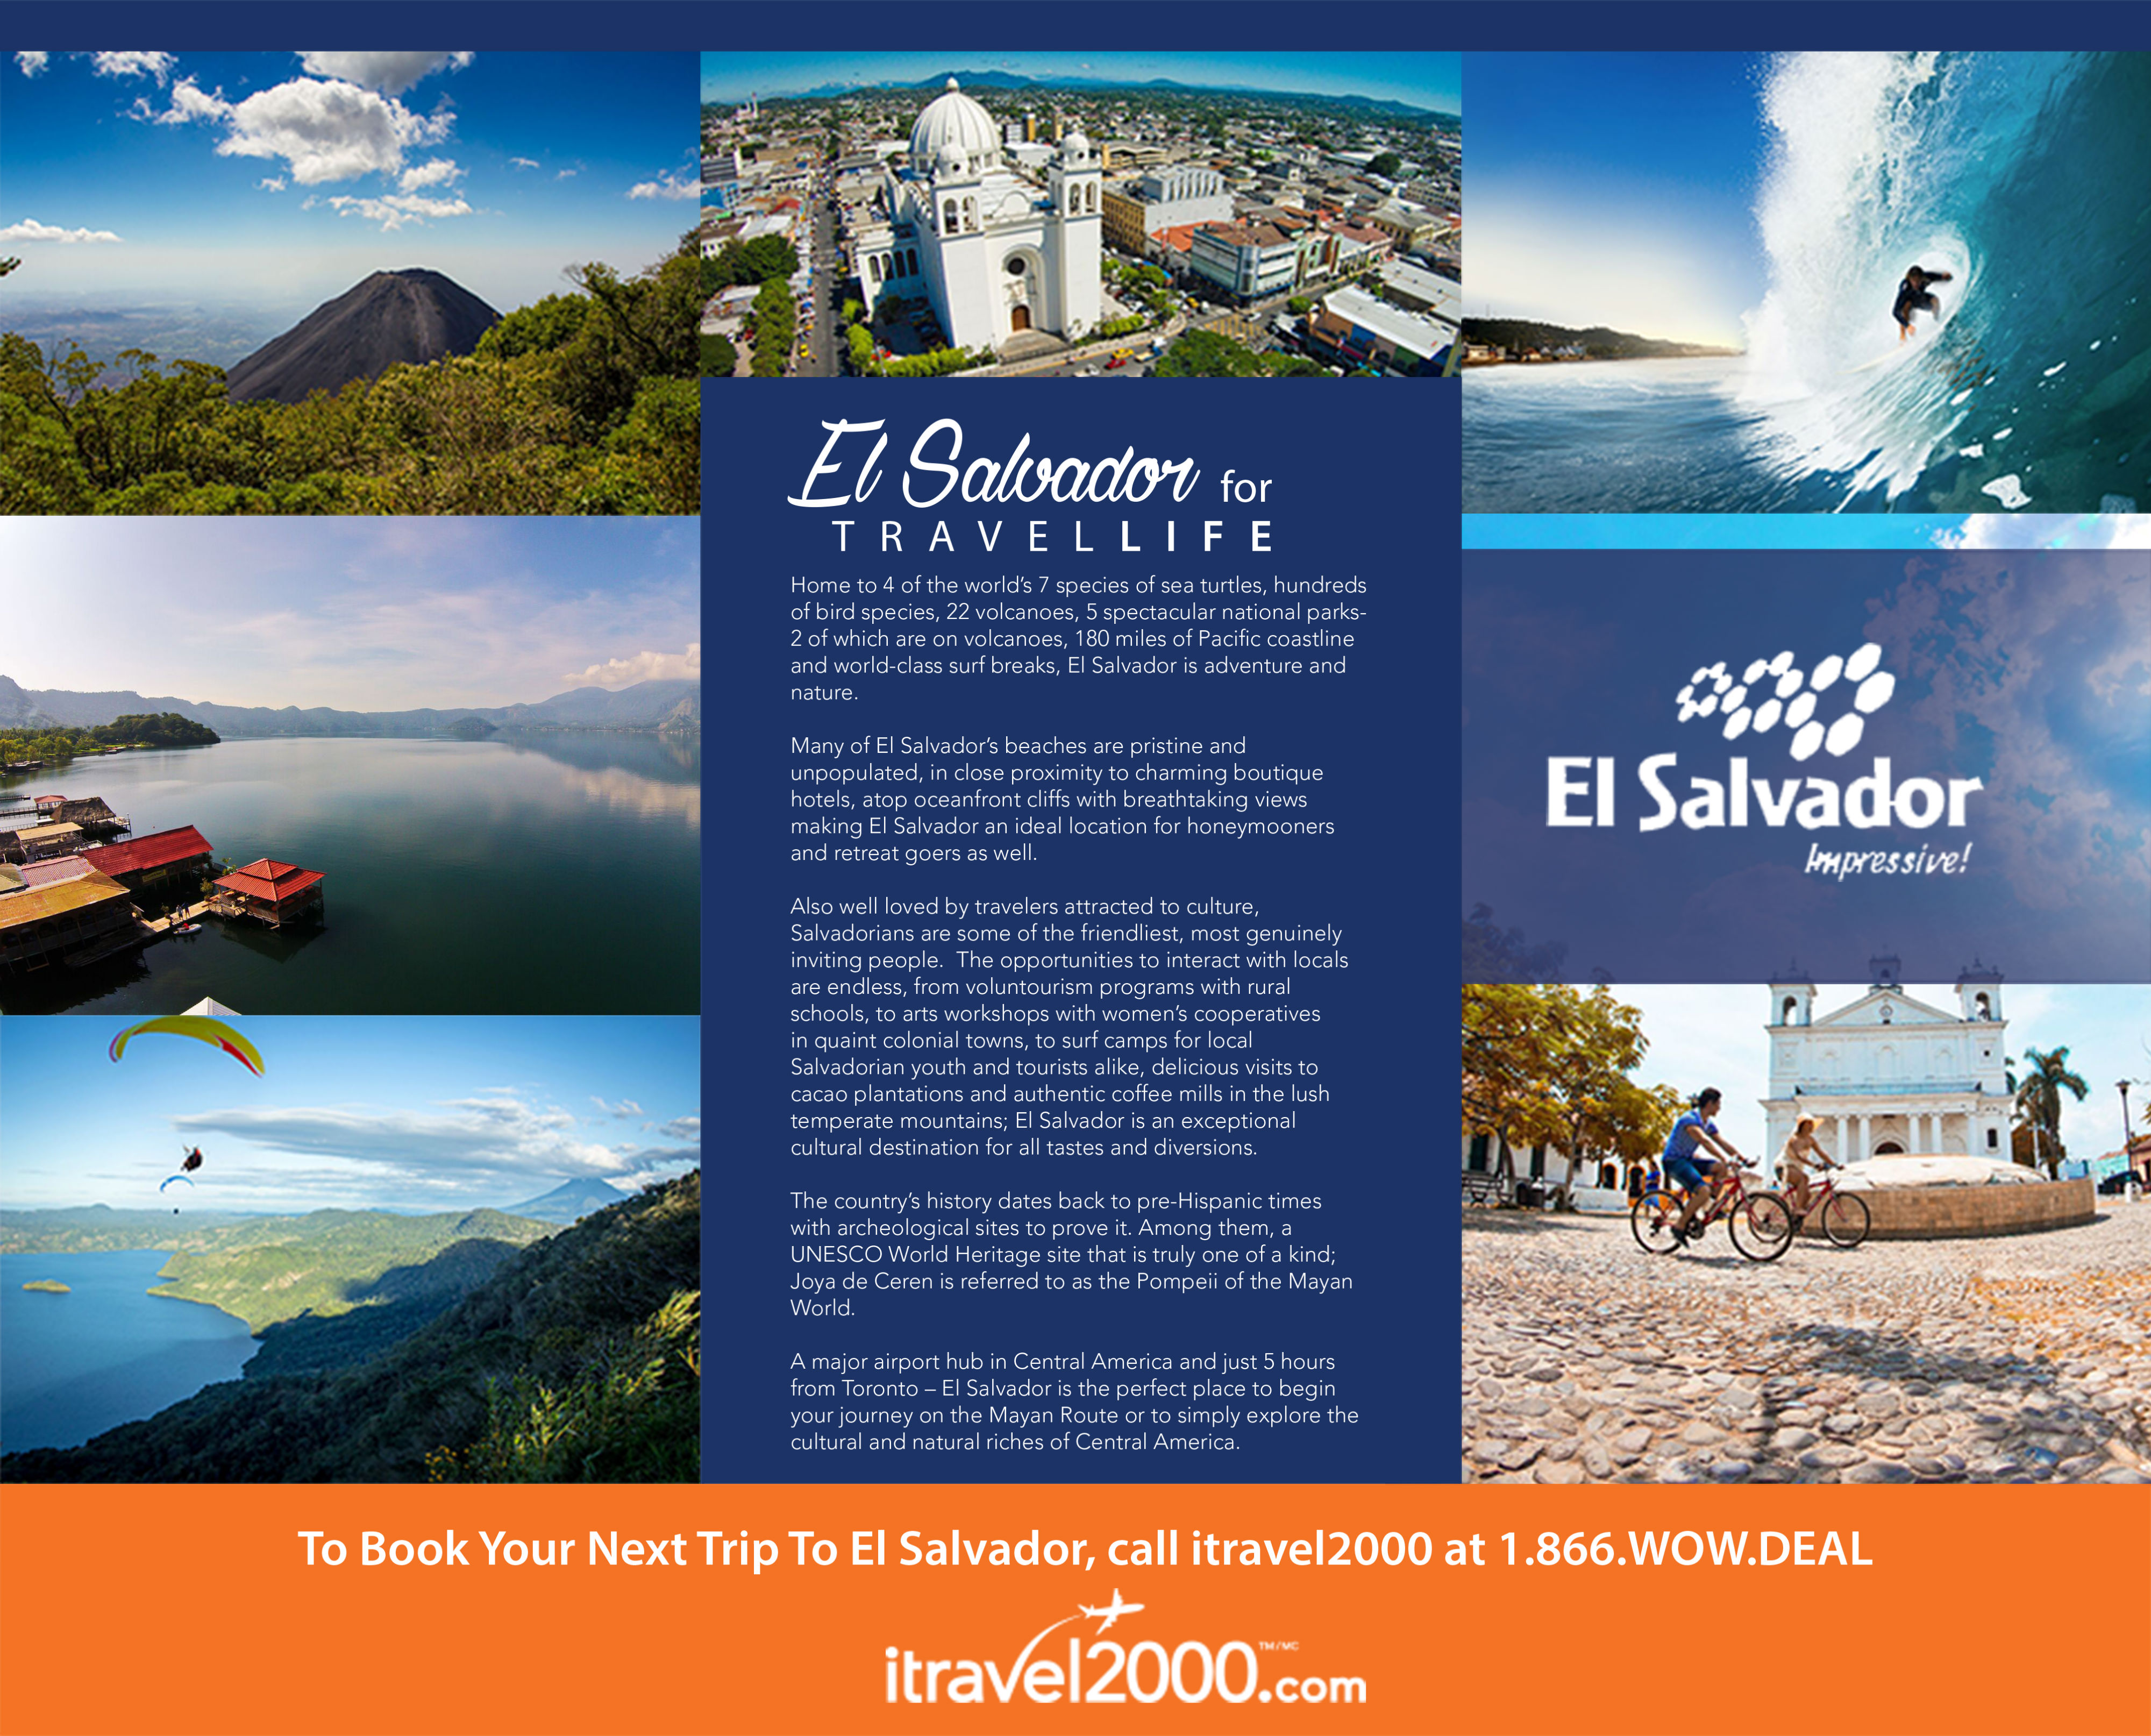 Travel: Now is the time to visit El Salvador – Orange County Register